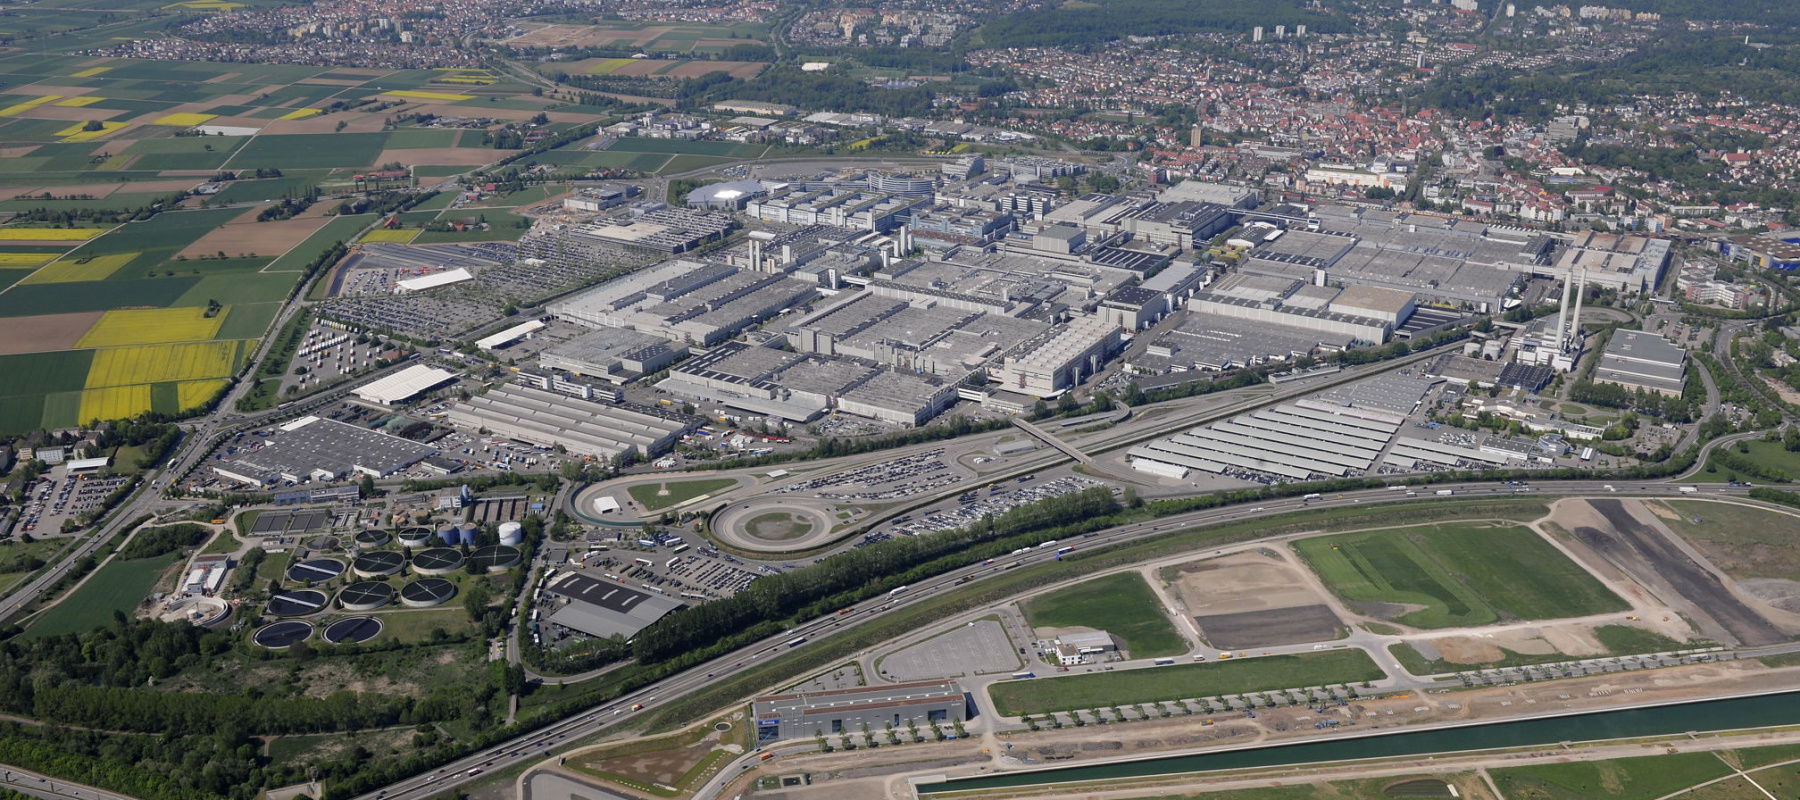 More than 22,000 people work at the Mercedes-Benz plant in Sindelfingen, Germany. It is the biggest production facility of Daimler AG worldwide. // Das Mercedes-Benz Werk Sindelfingen ist mit mehr als 22.000 Mitarbeitern das größte Produktionswerk der Daimler AG weltweit.